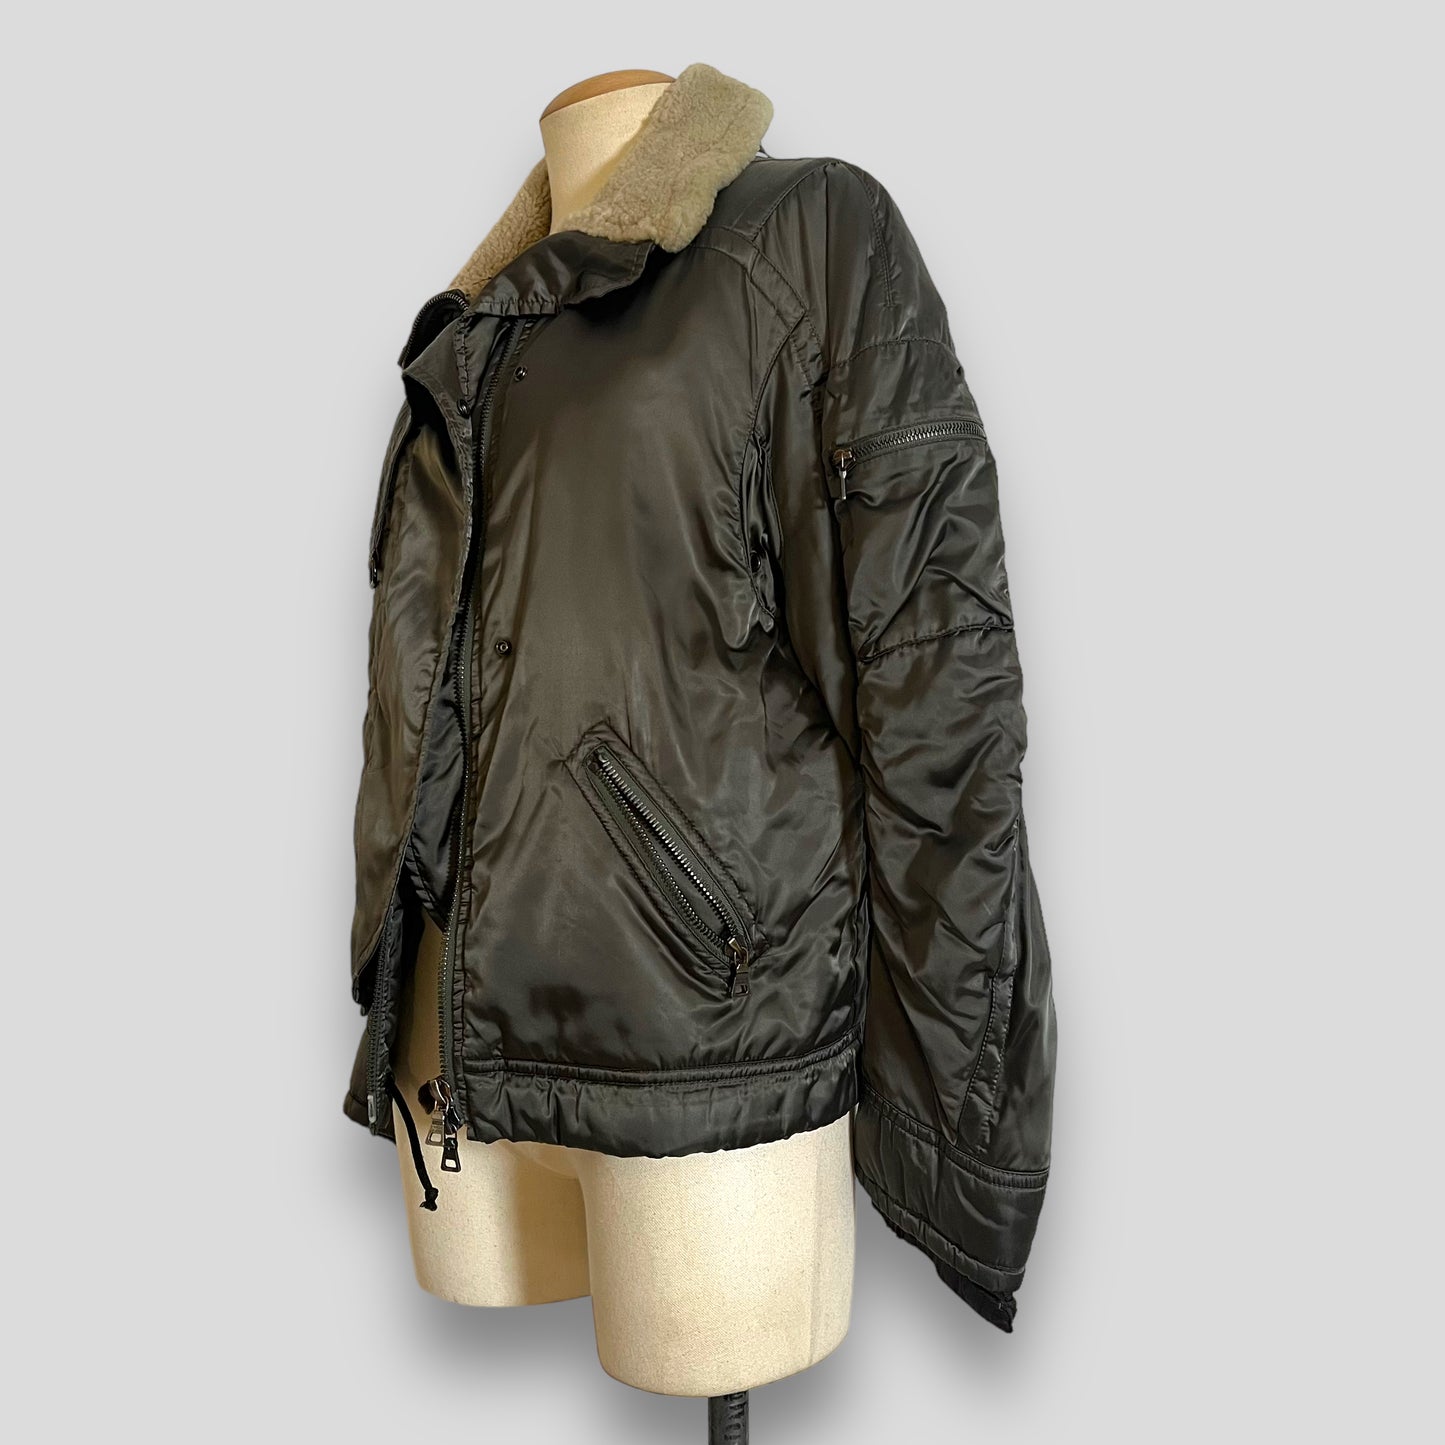 00’s Prada bomber jacket